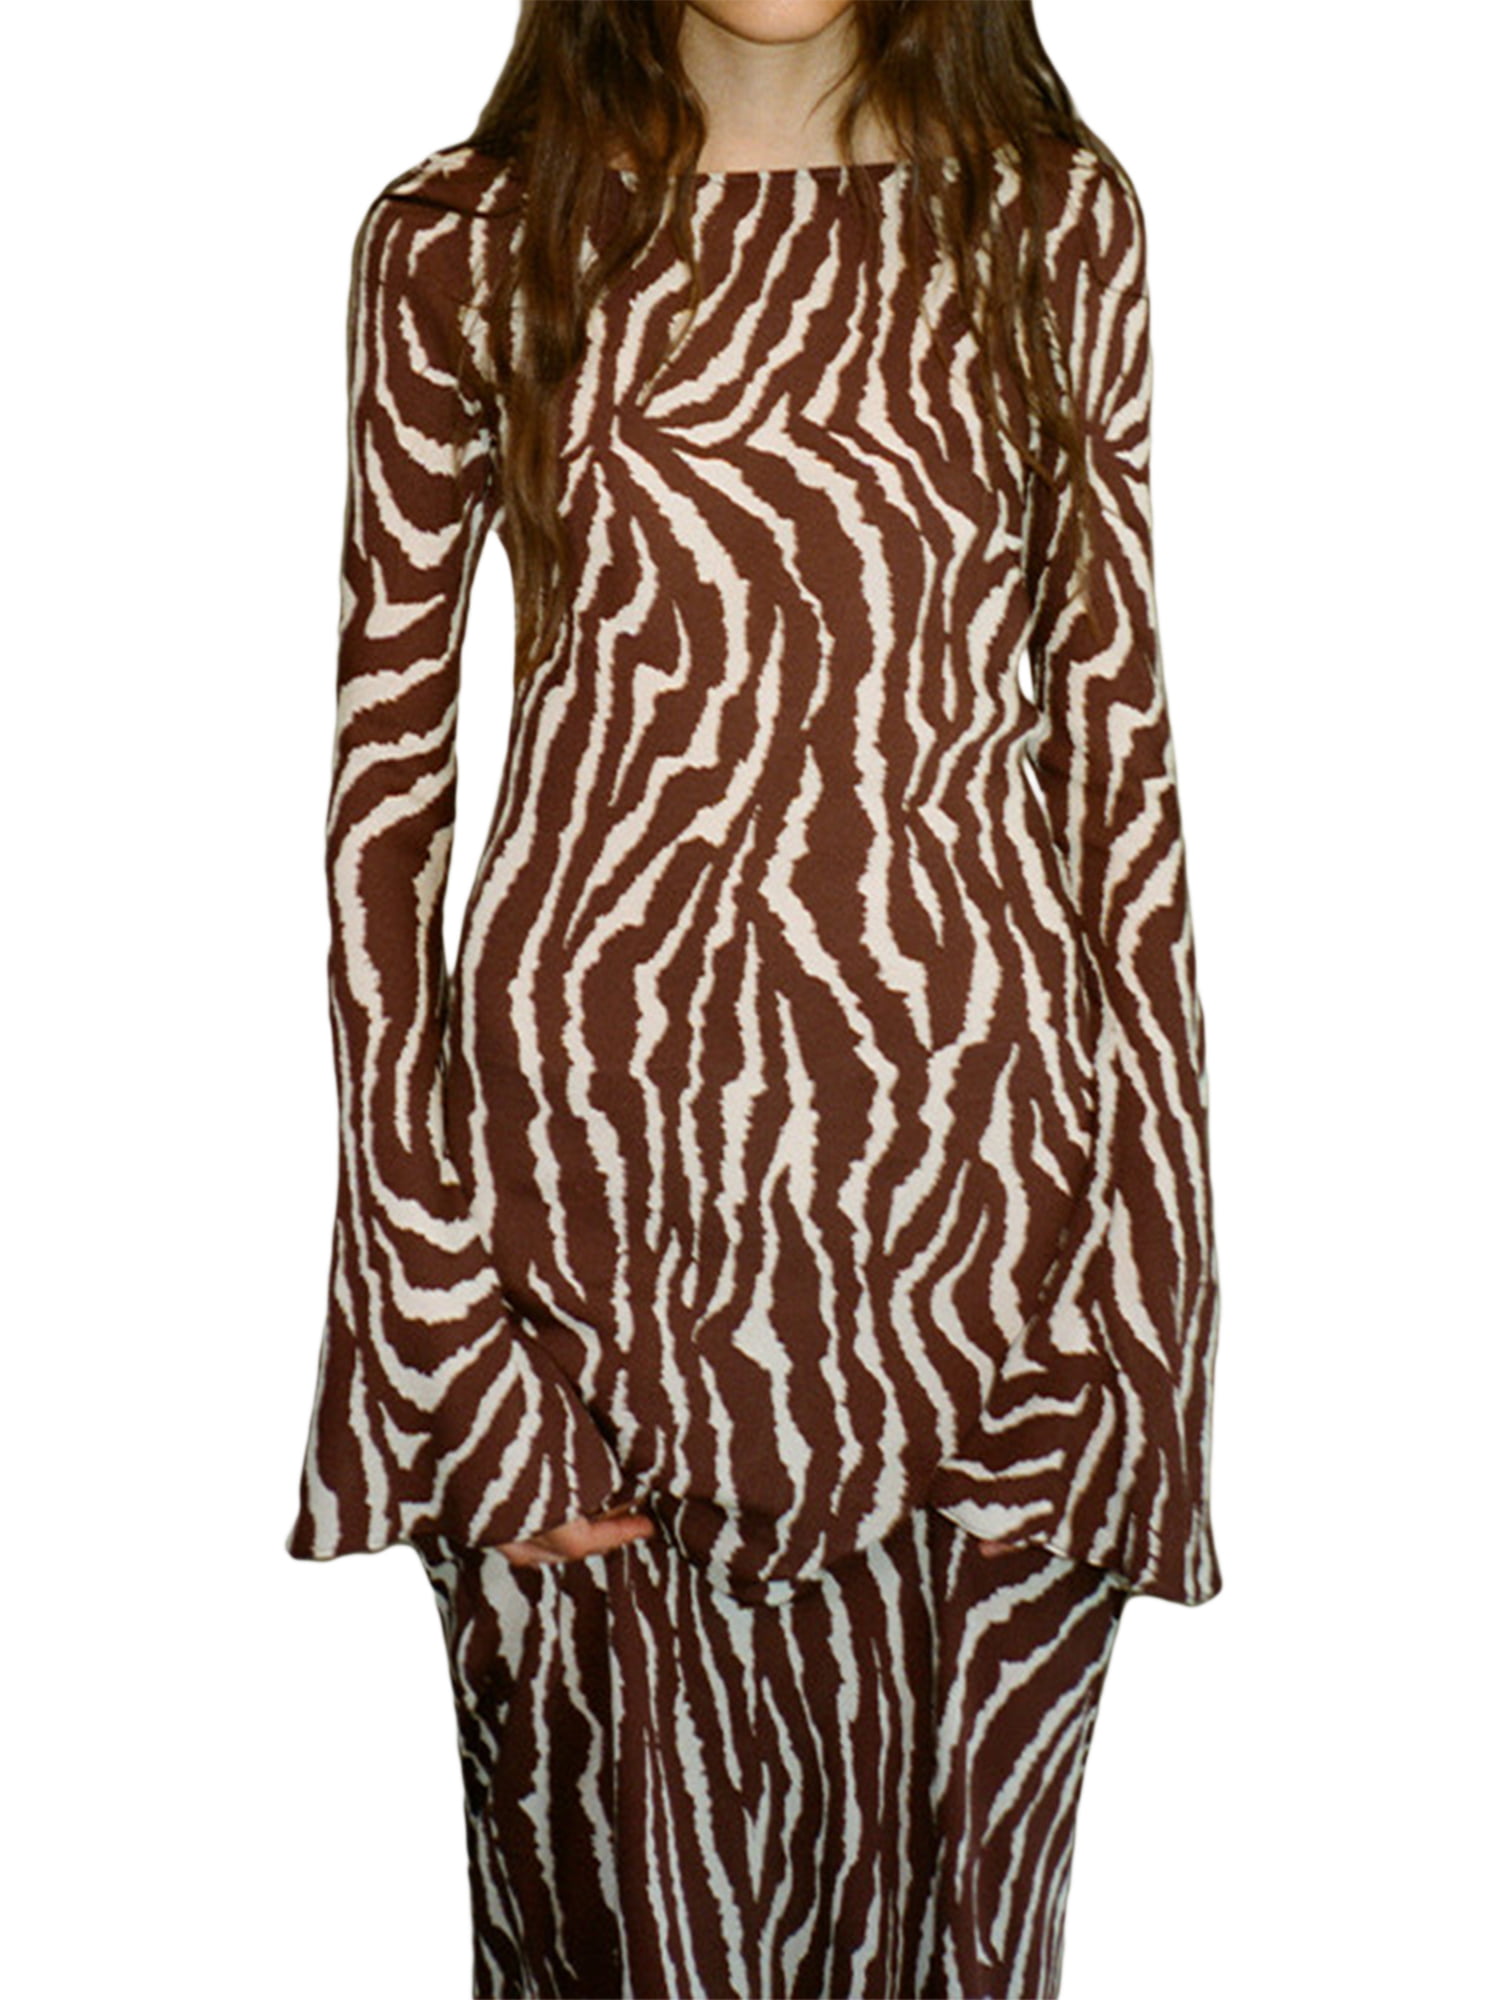 H&M Zebra Print Dress Tunic Size S, Beige Brown Zebra Shirt Dress, Animal  Print | eBay